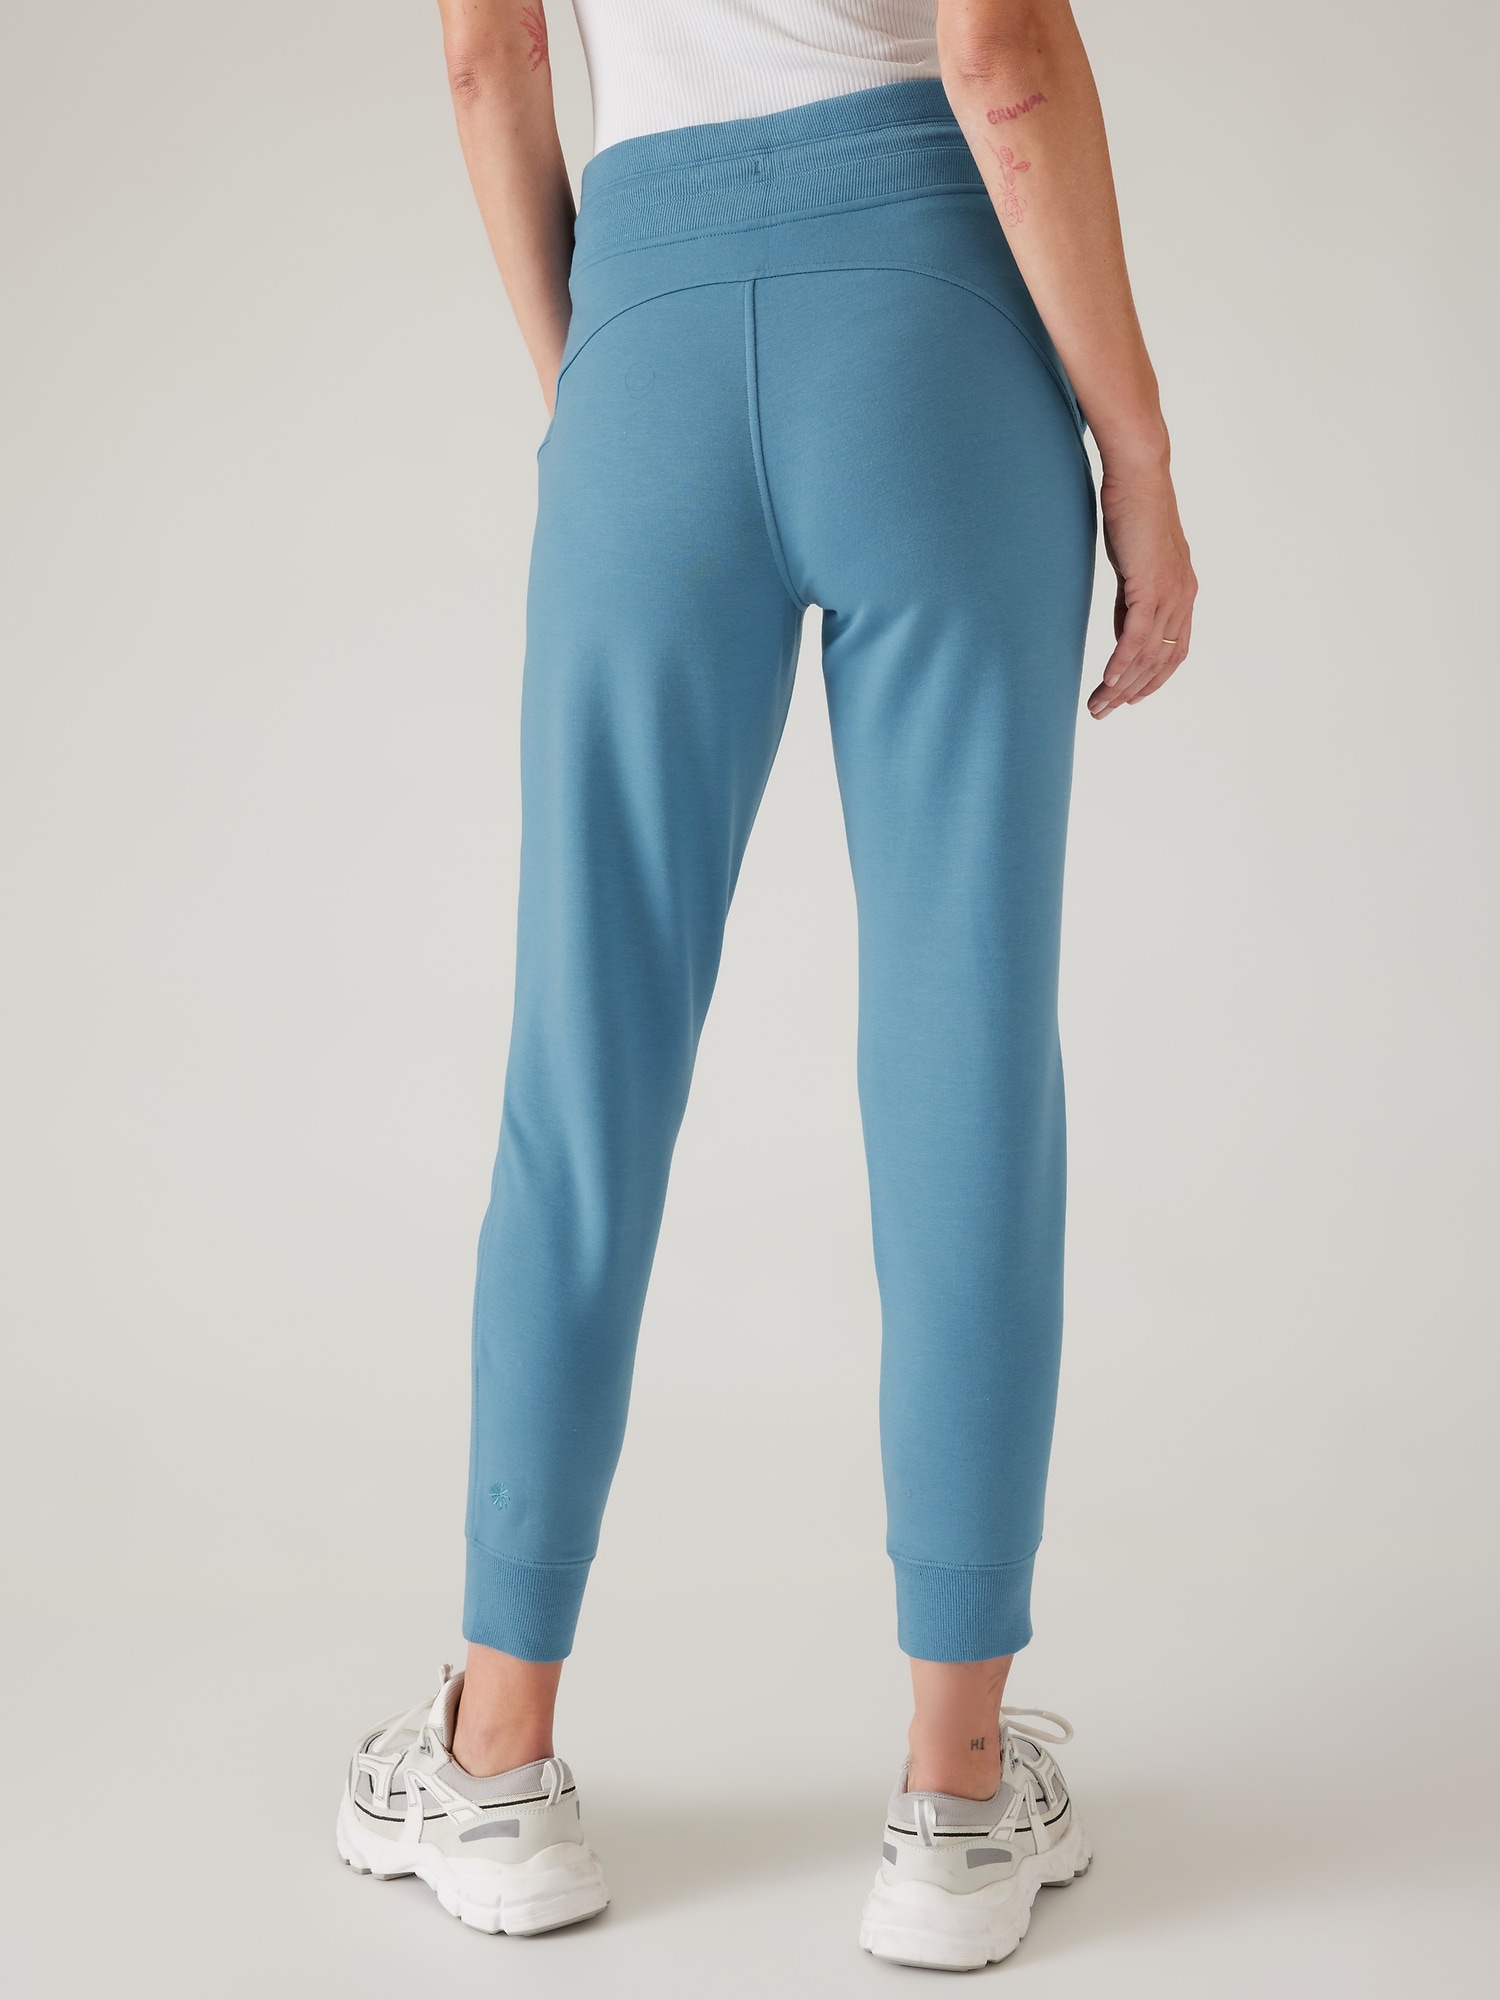 Lululemon Align Pant Full Length with Pockets 28 Blue Gatsby size